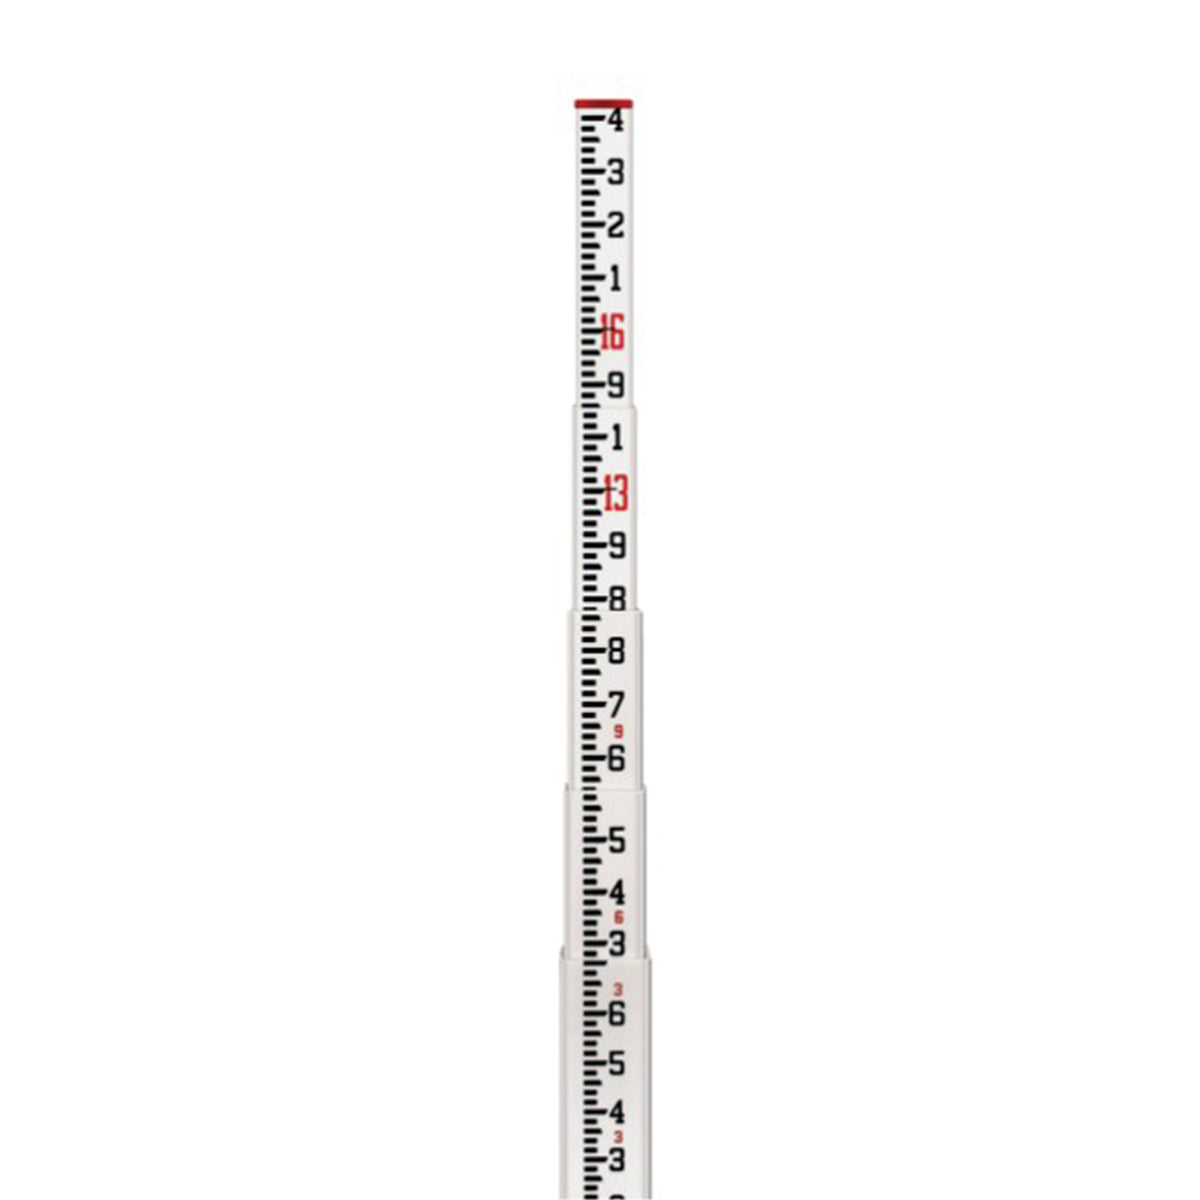 11-SCR16-T SitePro 16-ft Fiberglass Leveling Rod (CR) - 10ths -Rods, Poles & Accessories- eGPS Solutions Inc.